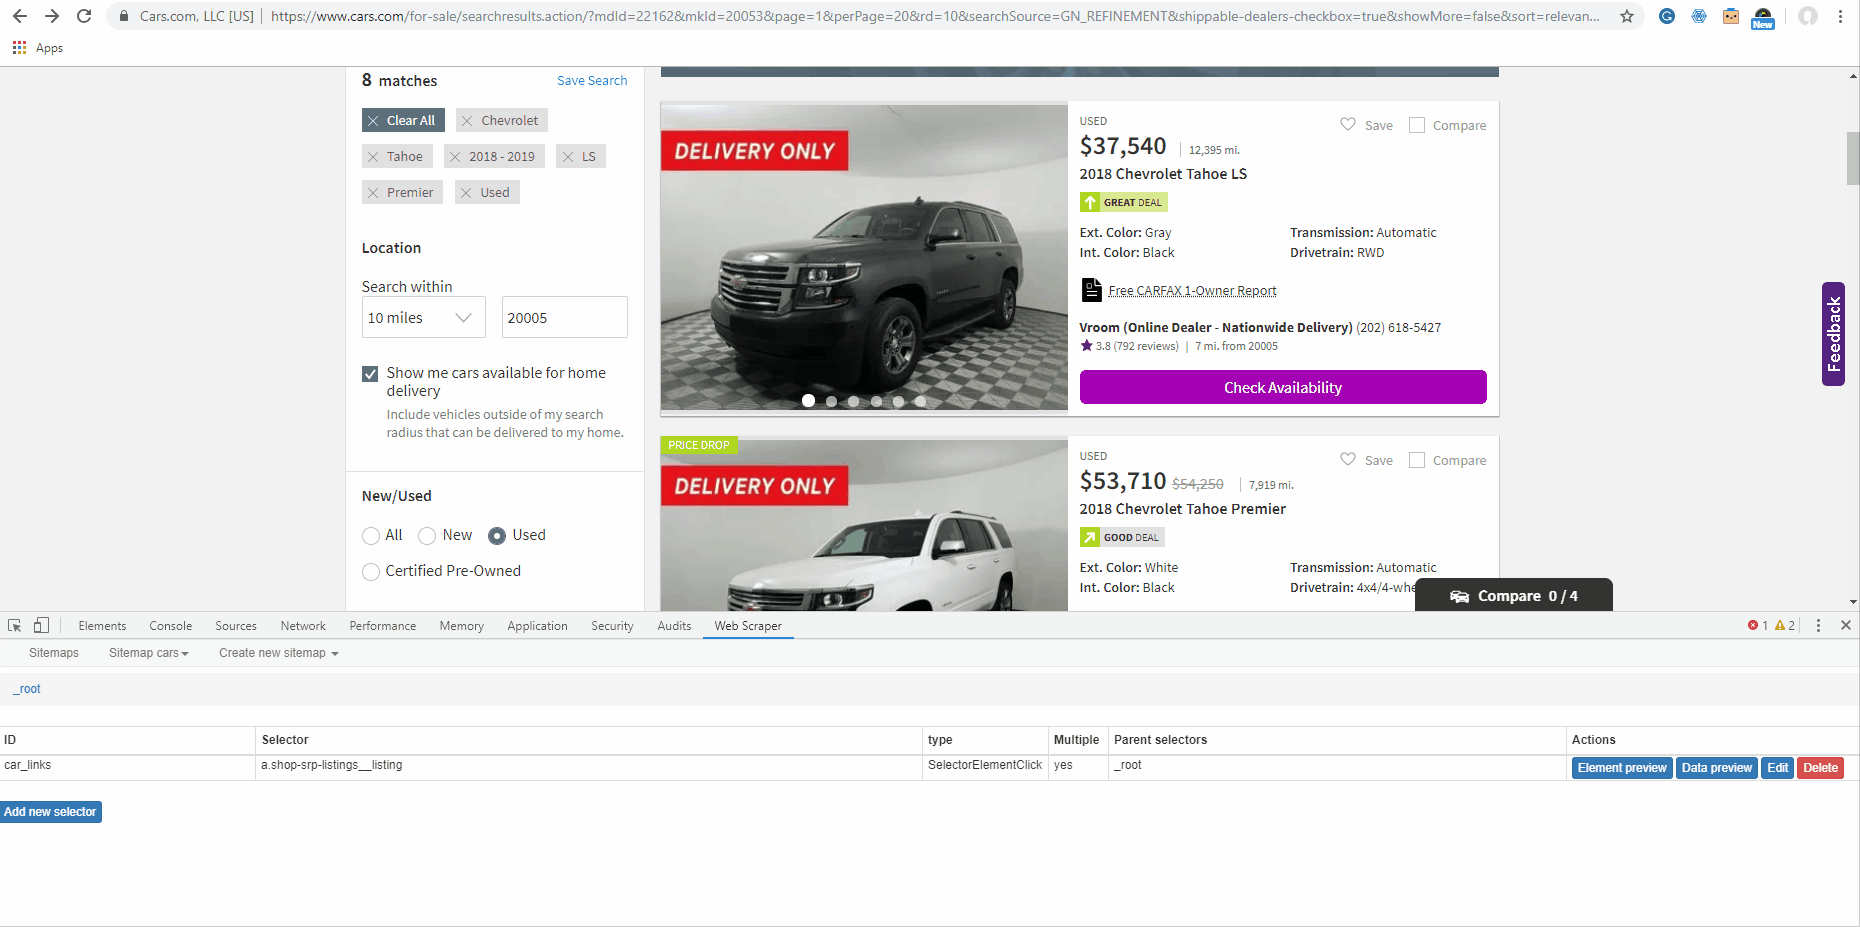 obtain-url-cars-com-scraper